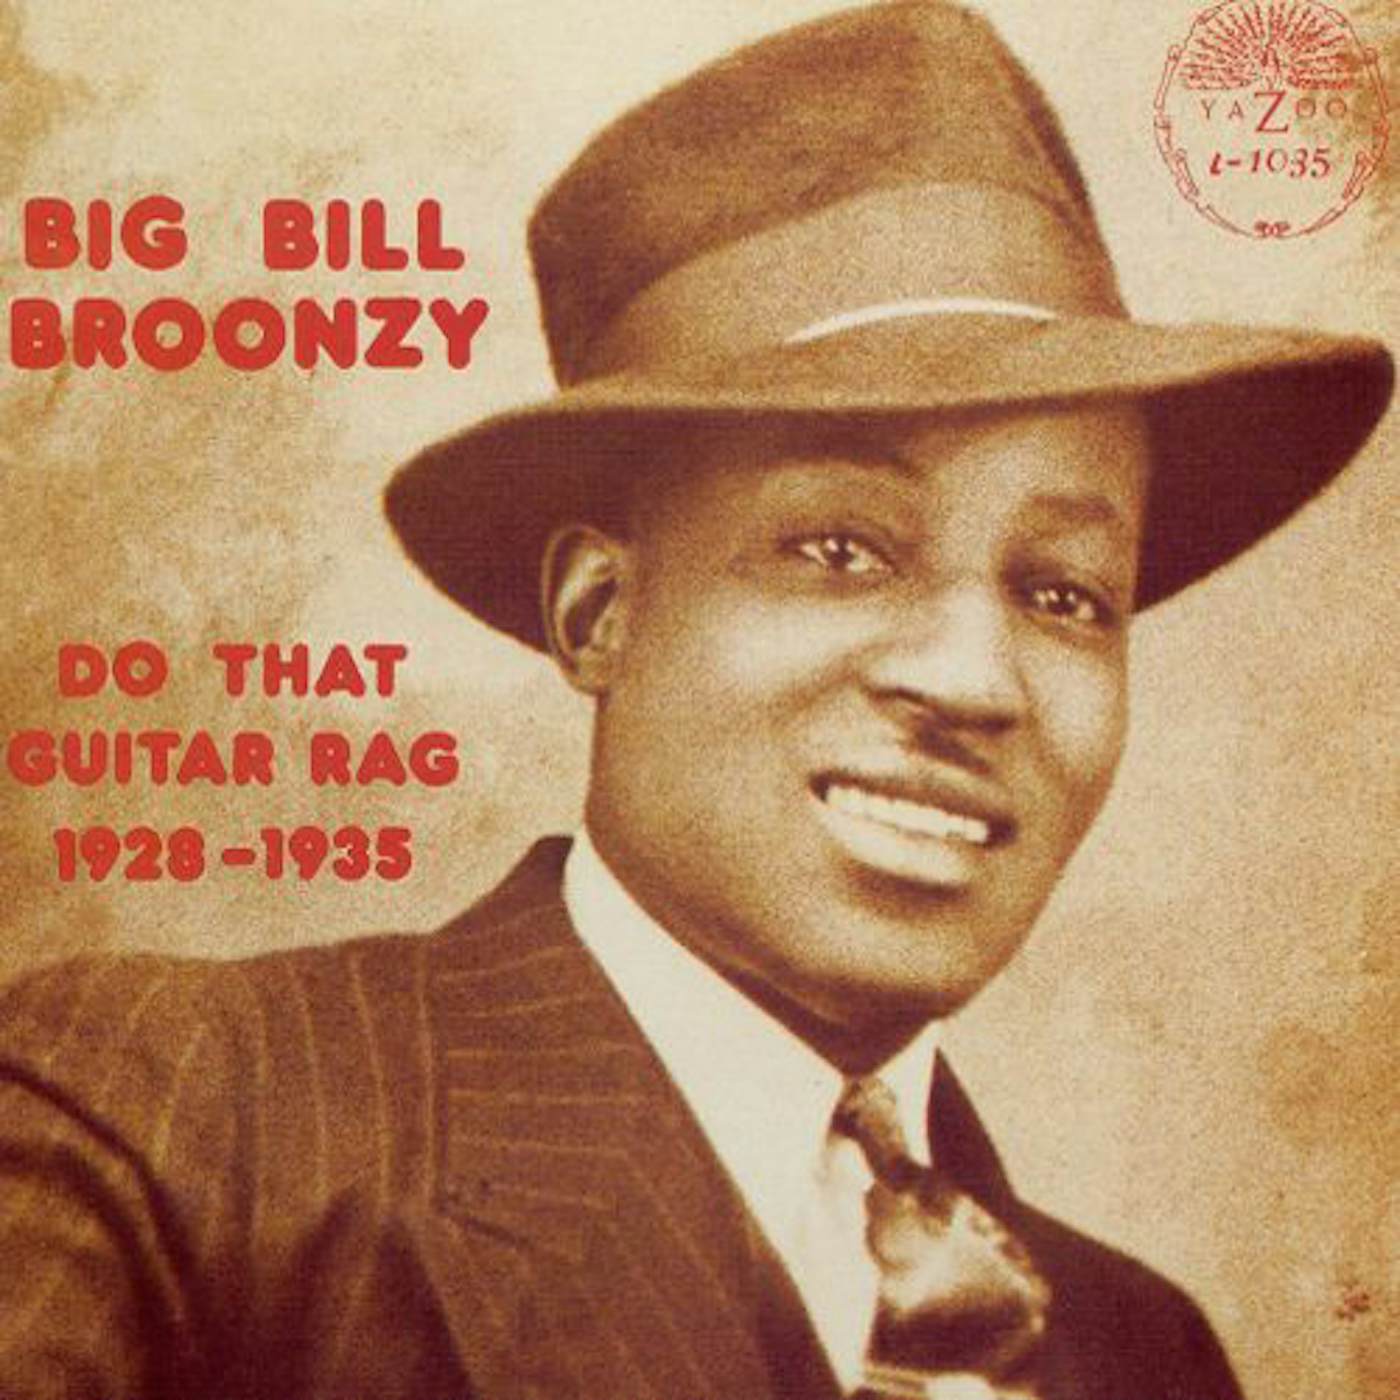 Big Bill Broonzy DO THAT GUITAR RAG 1928-1935 Vinyl Record